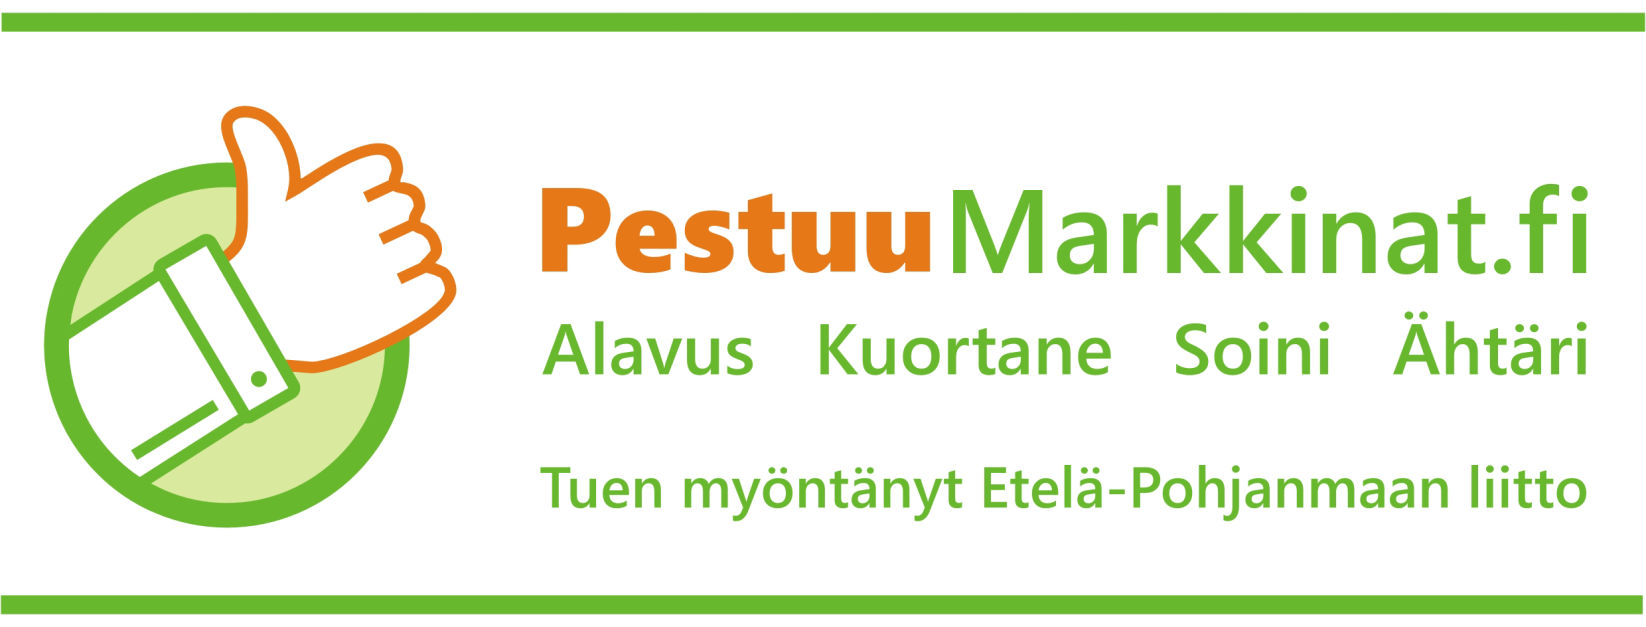 PestuuMarkkinat-palvelun logo